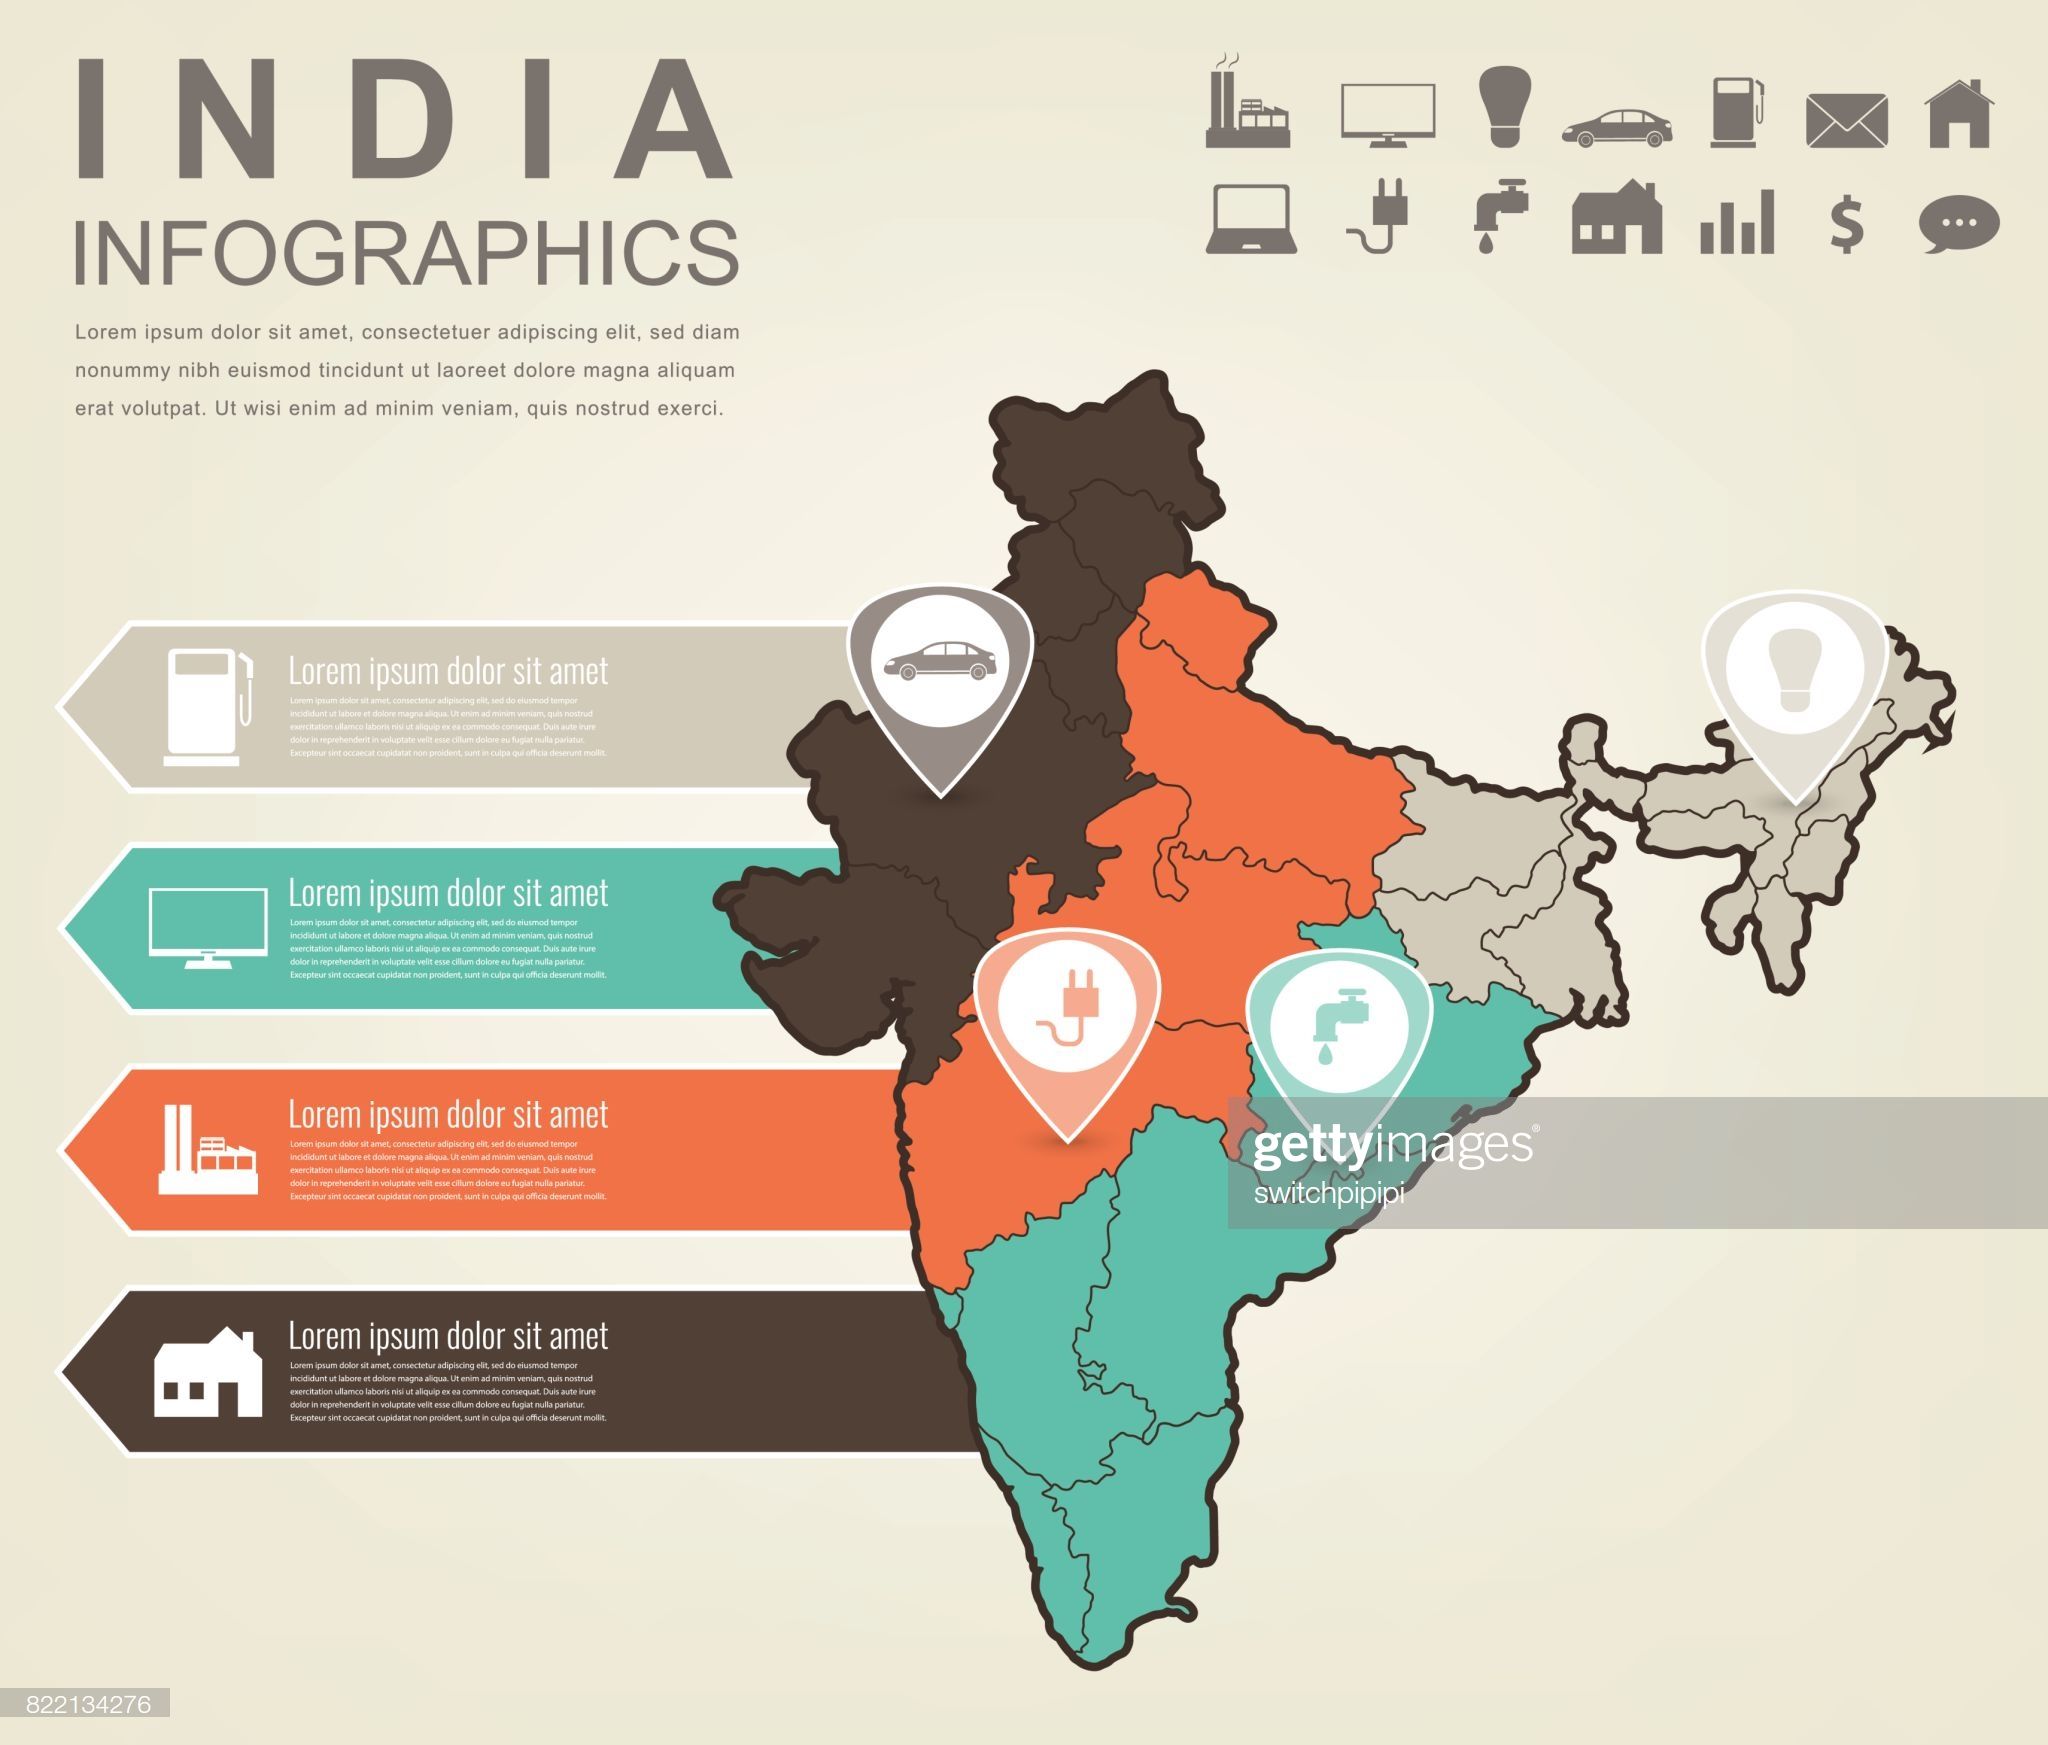 b"Infographic on Indias wealth report | DaSantosh"